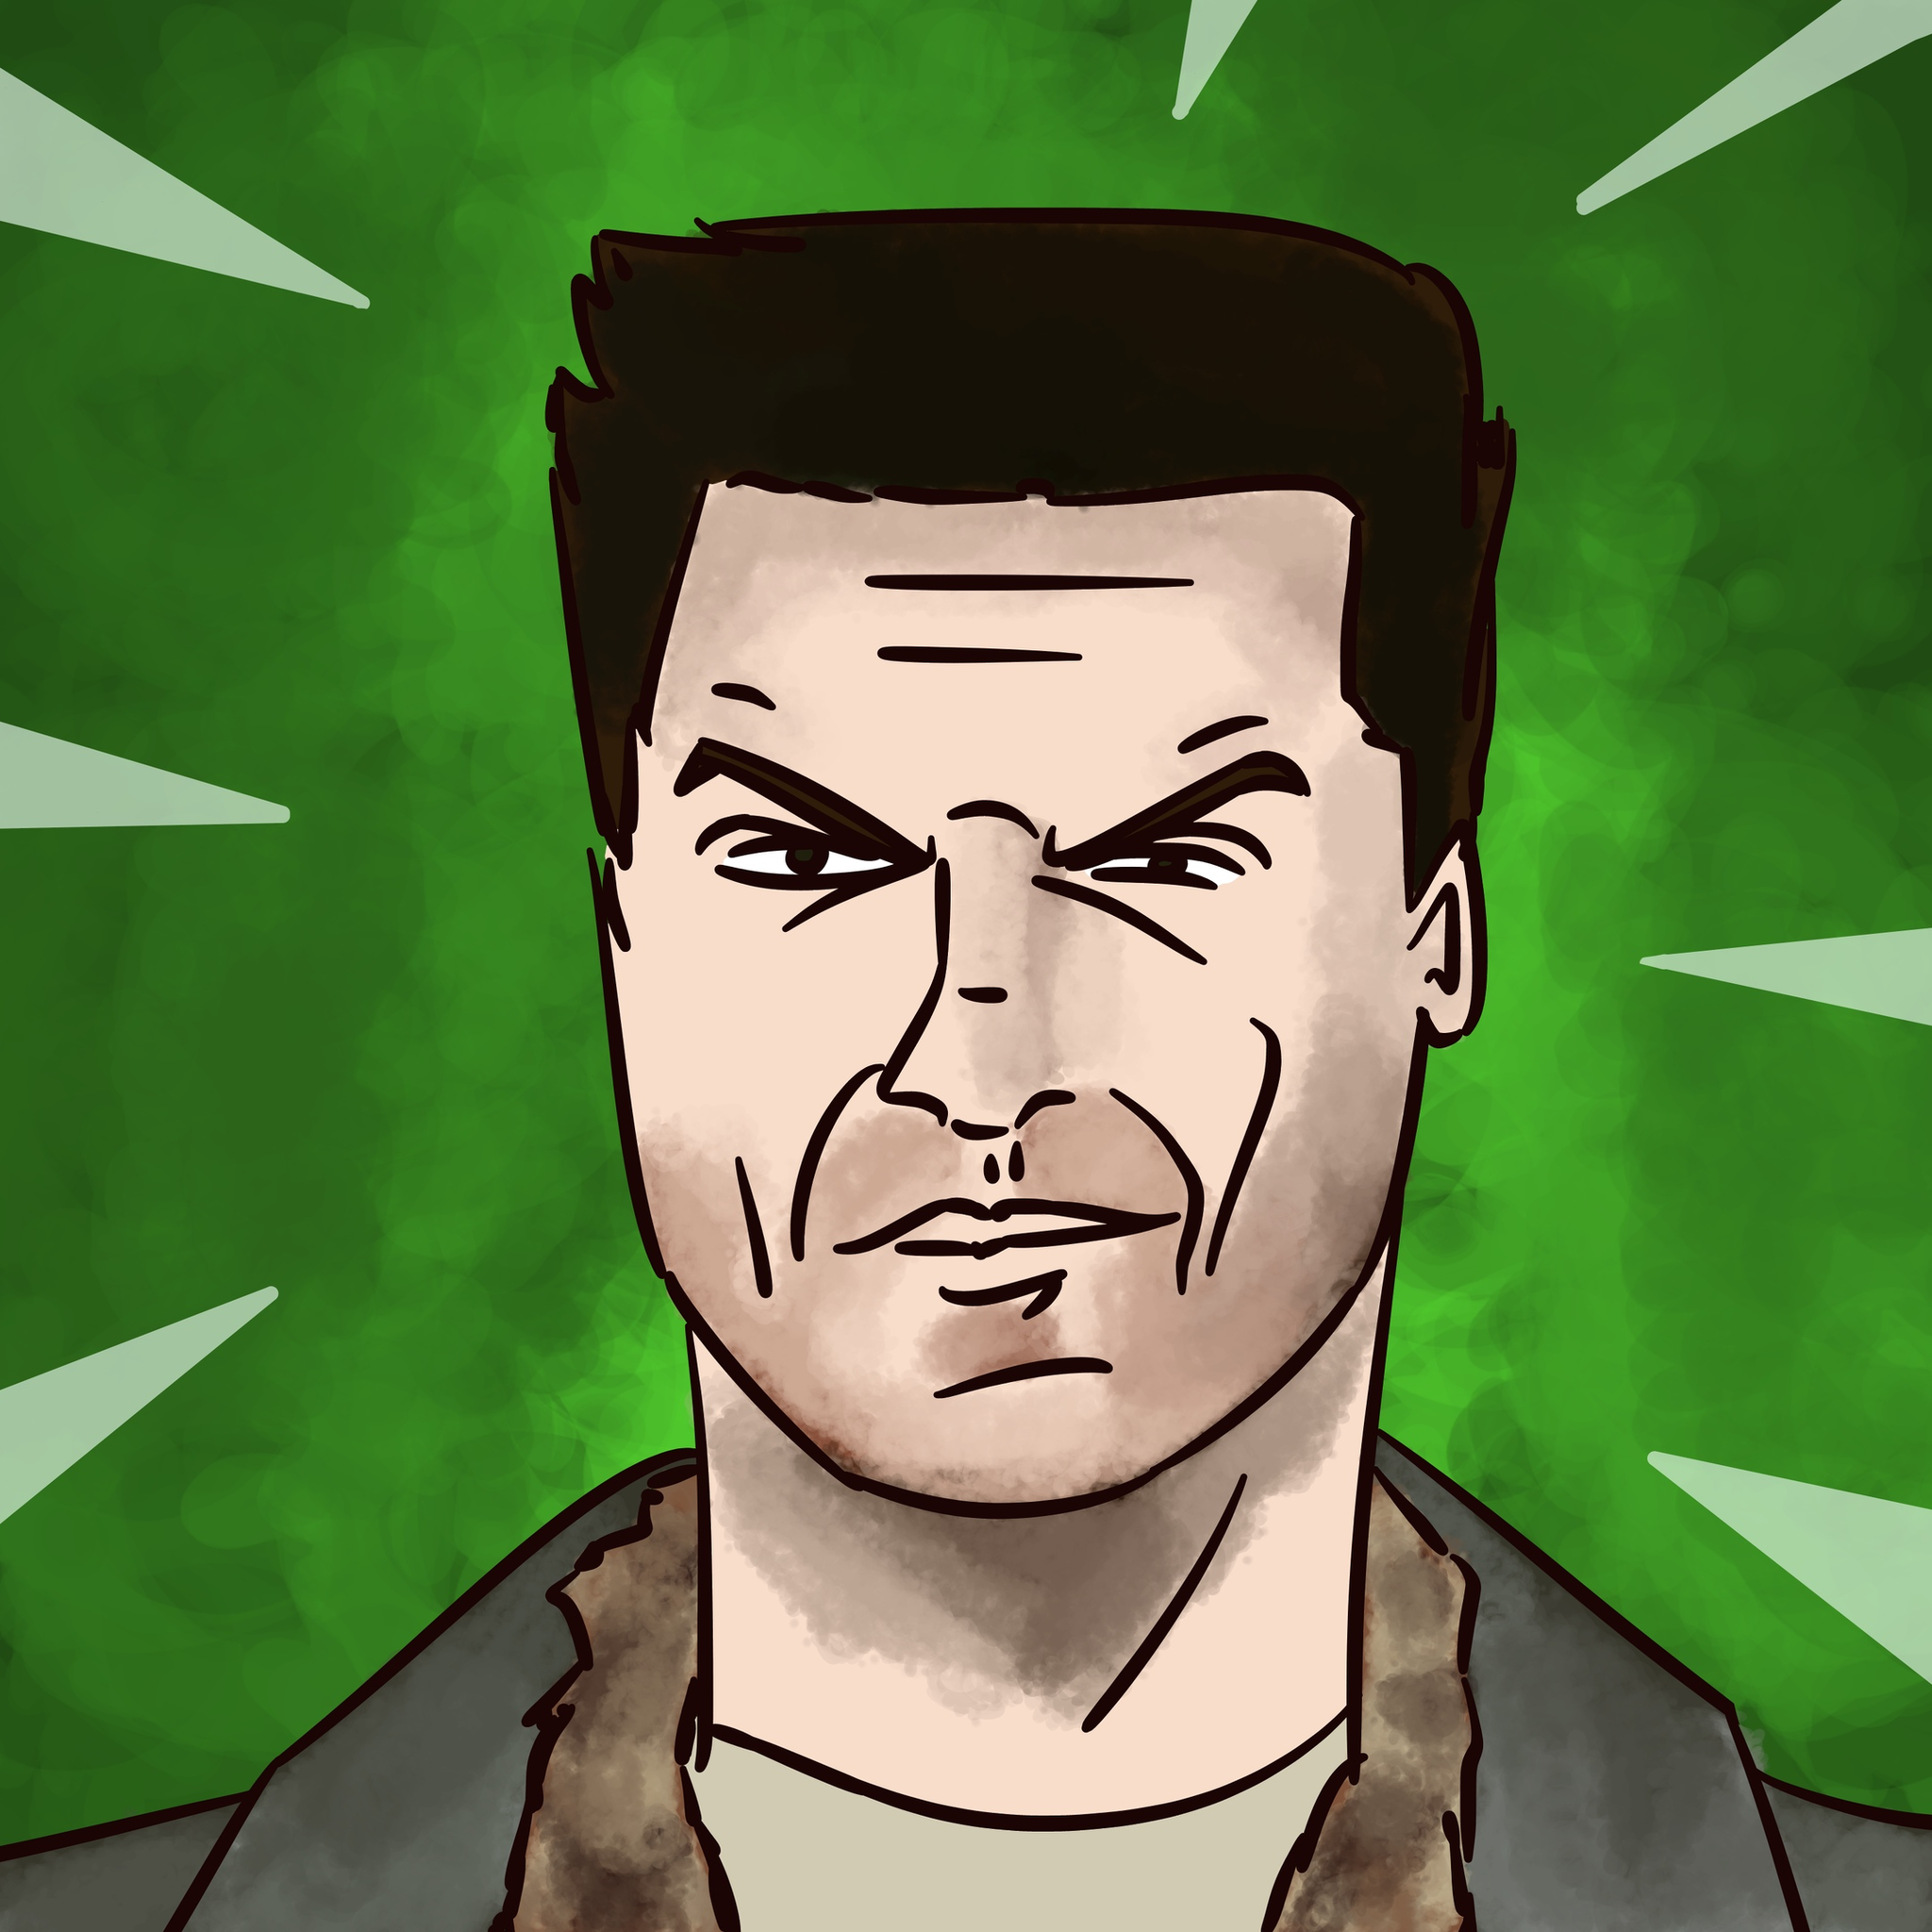 Kislinka [Max Payne] - Games, Comics, Max payne, Cover, Metal, Video, Longpost